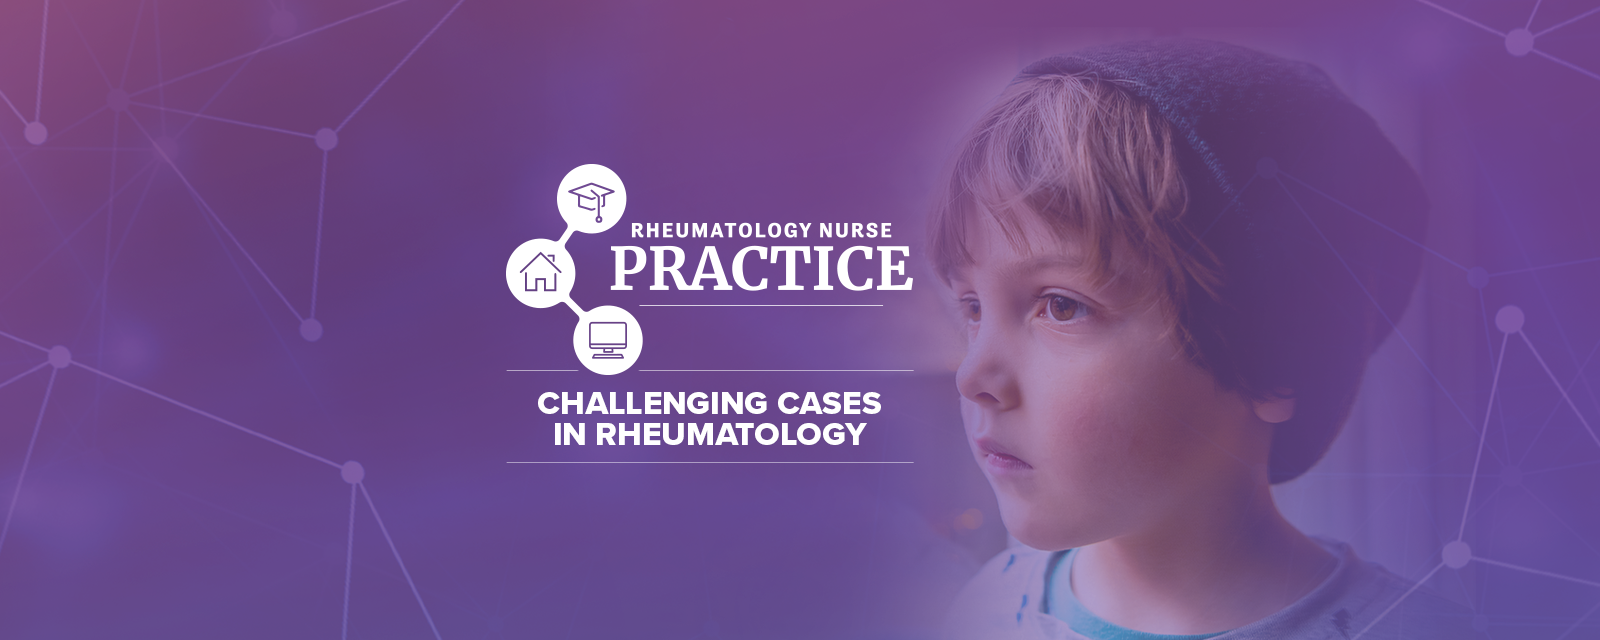 Challenging Cases in Rheumatology: Focus on Juvenile Psoriatic Arthritis